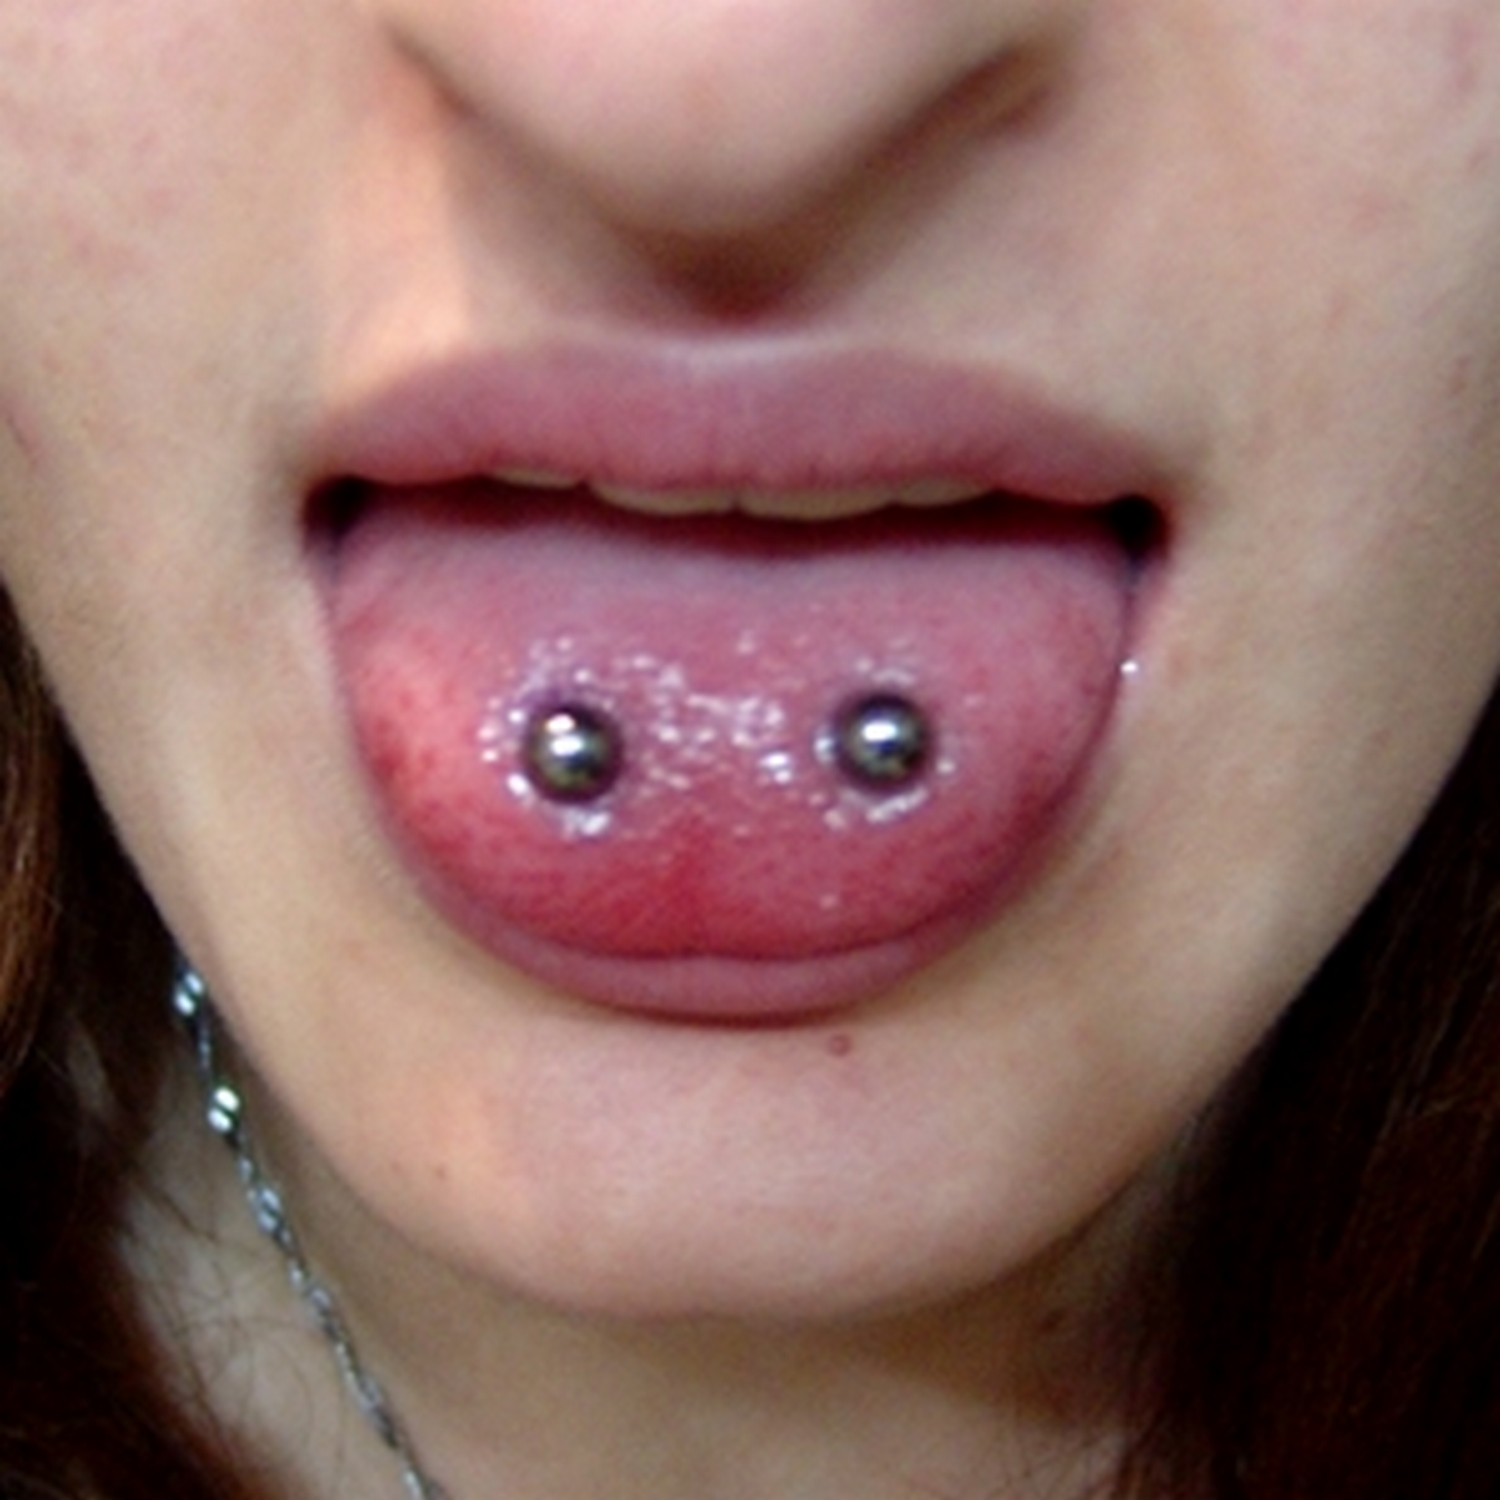 venom,tongue,ikili,dil,piercing